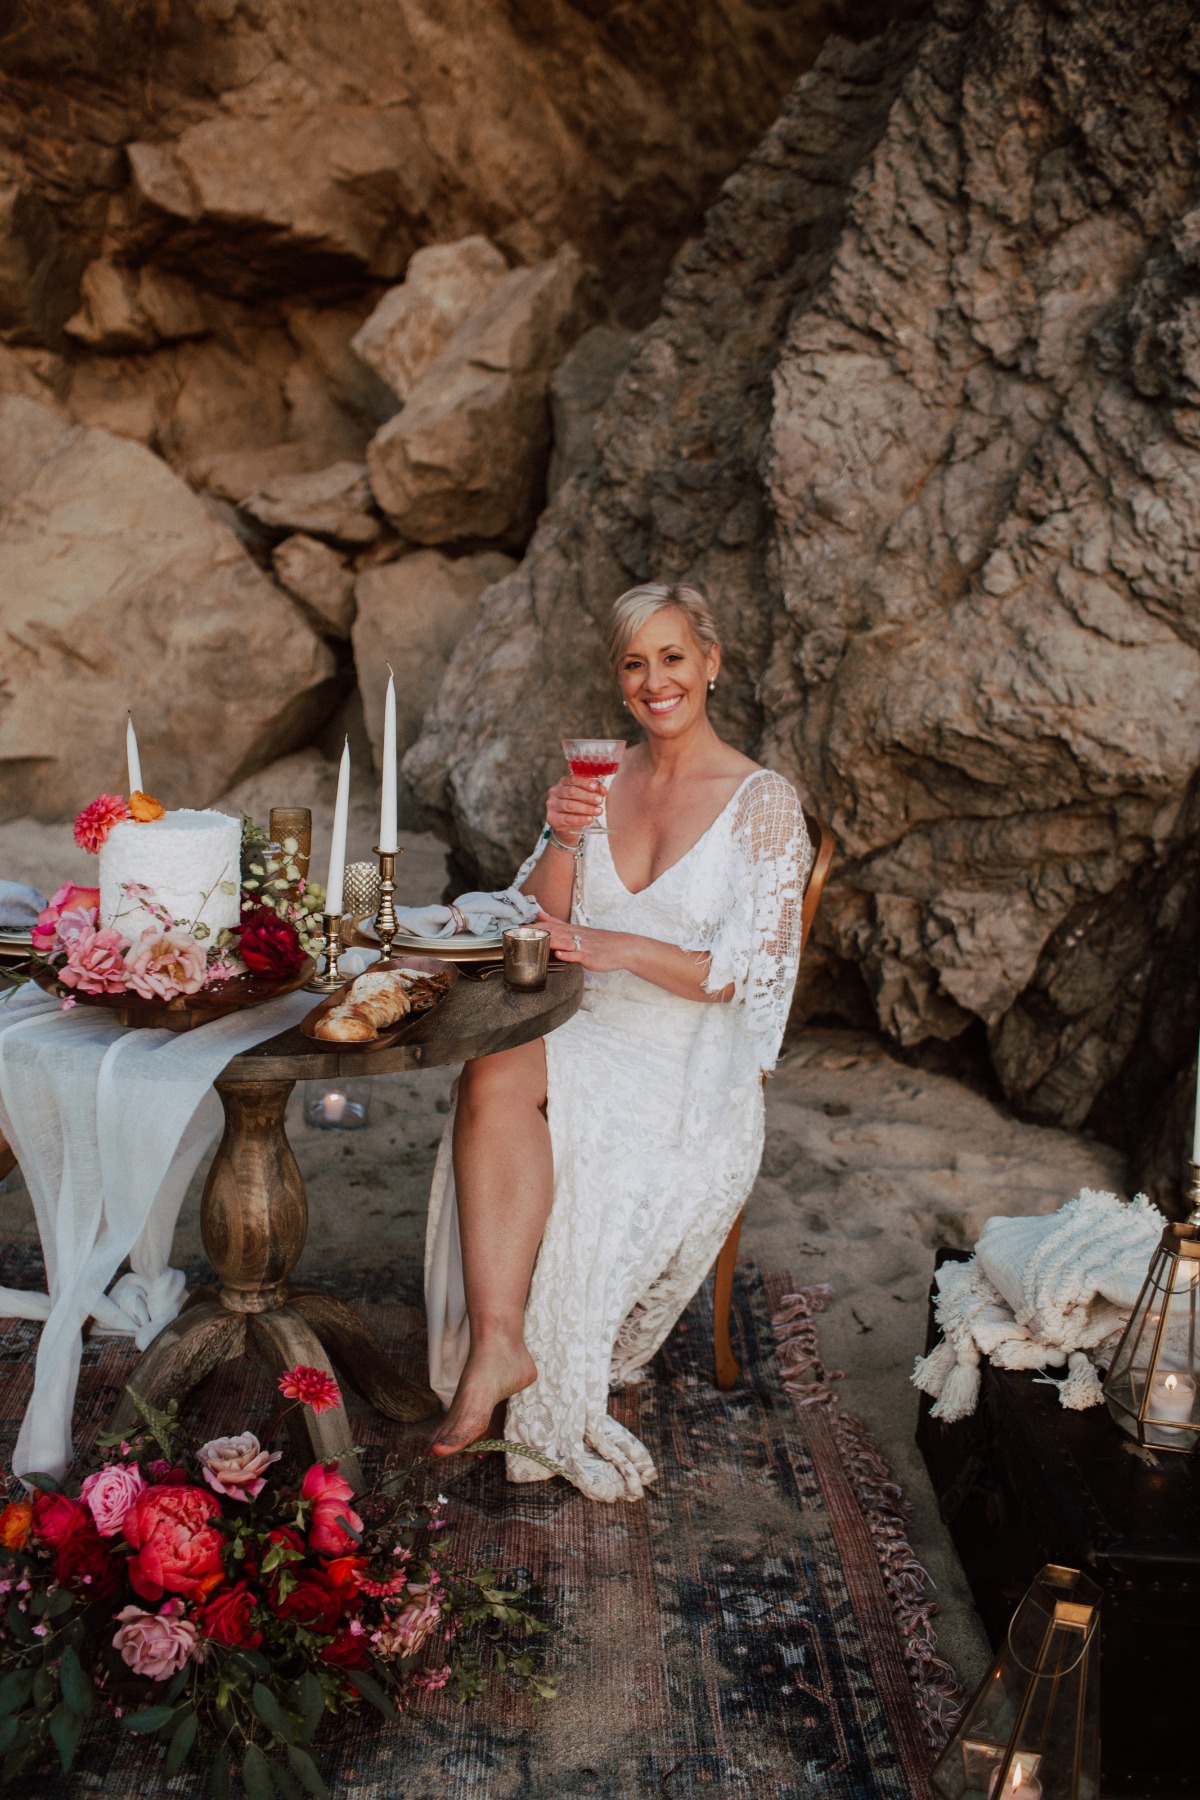 Boho beach bride at sweetheart table